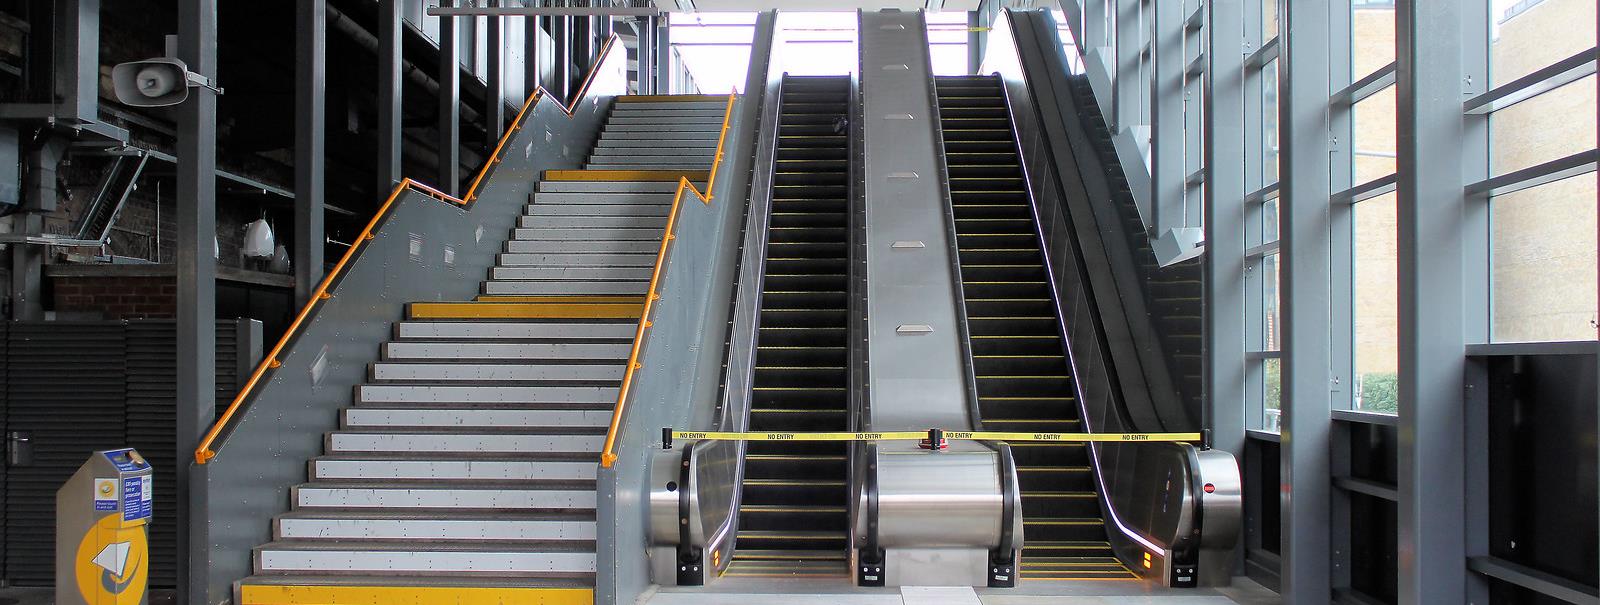 Limehouse Station Escalators